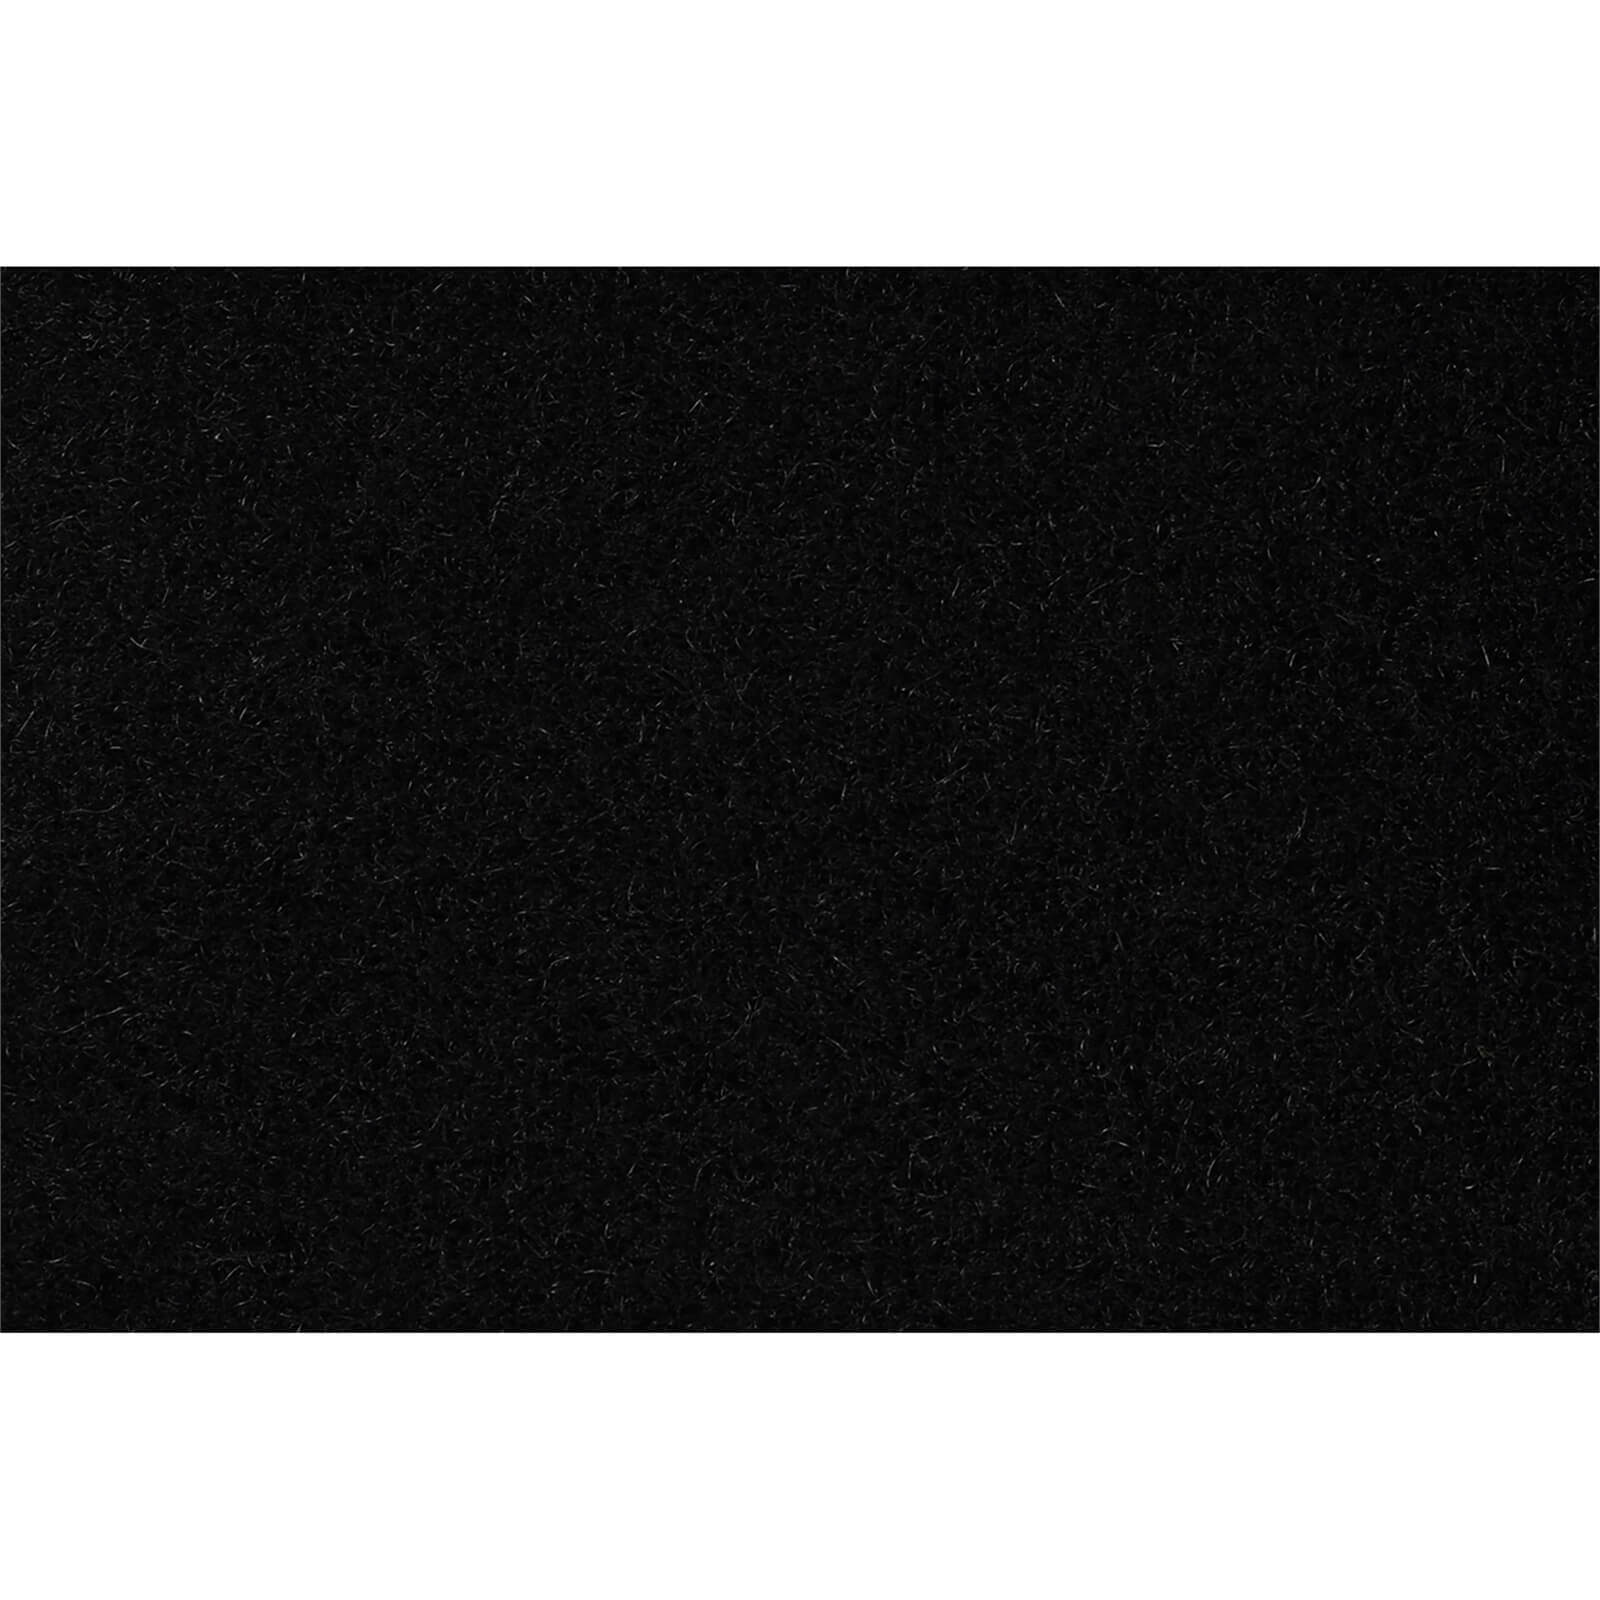 Photo of Synthetic Coarse Coir Matting -black